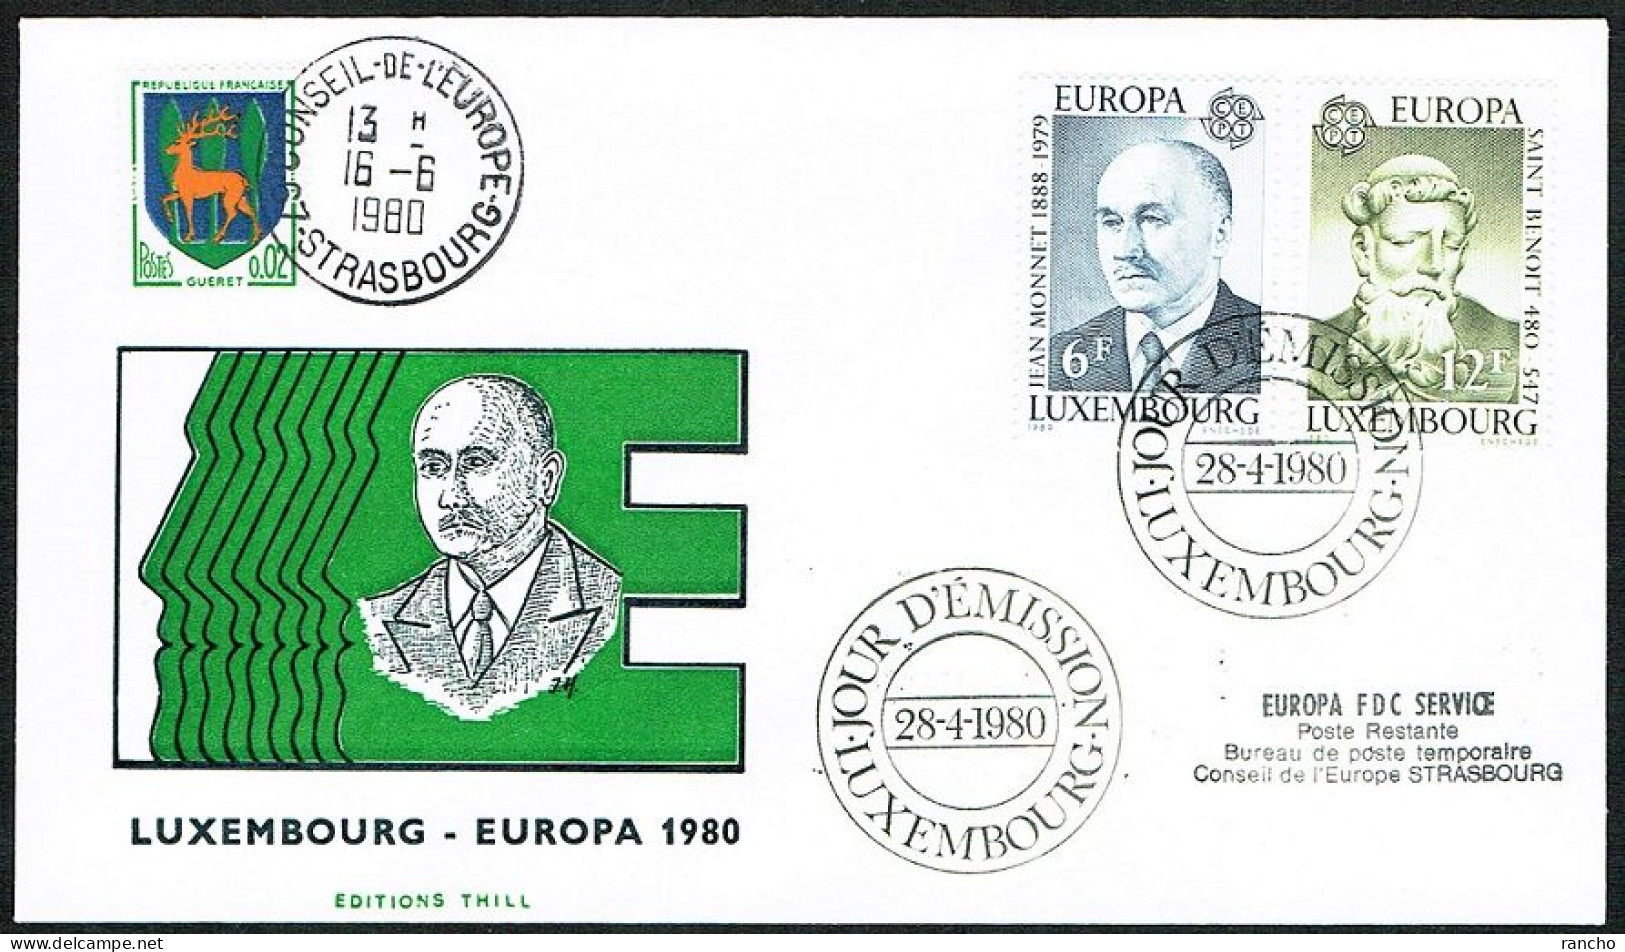 EUROPA FDC SERVICE . TIRAGE LIMITE Nr:60/20. DU CONSEIL DE L'EUROPE STRASBOURG. LUXEMBOURG.28.4.1980. - Lettres & Documents